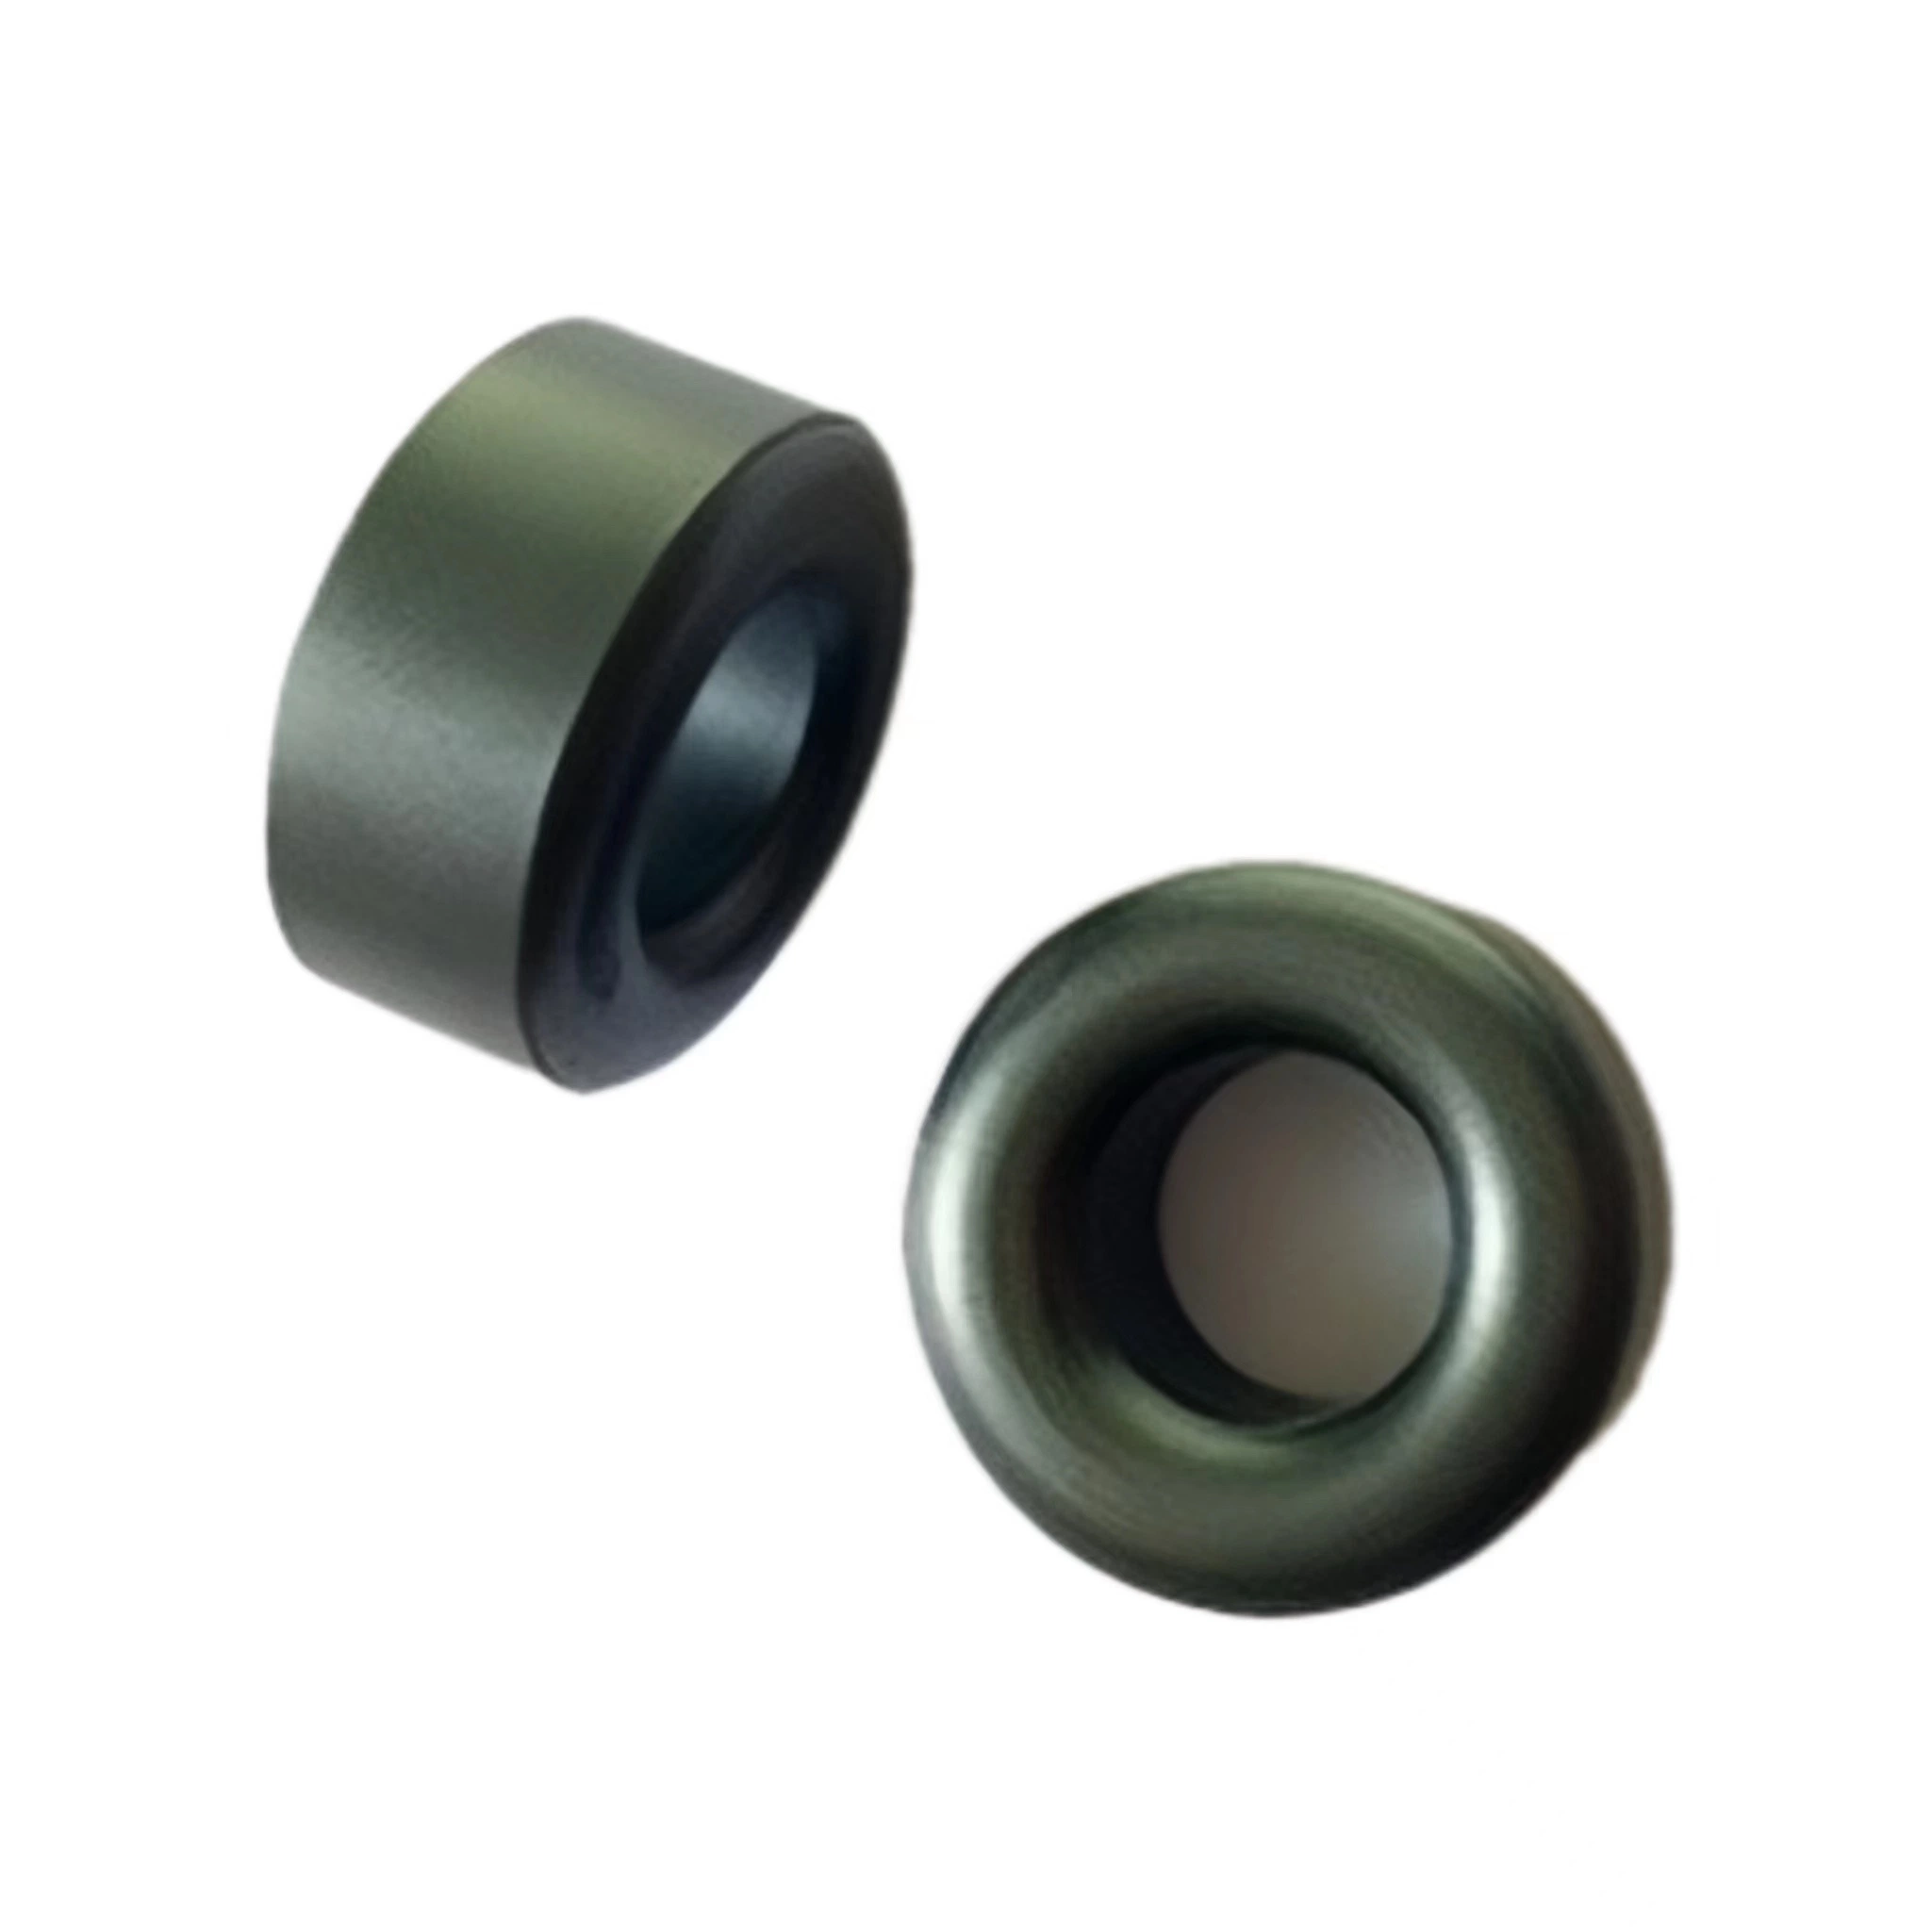 NdFeB Magnet Nanocrystalline Core T12*6*4 Ferrite Soft Magnetic Ring Core